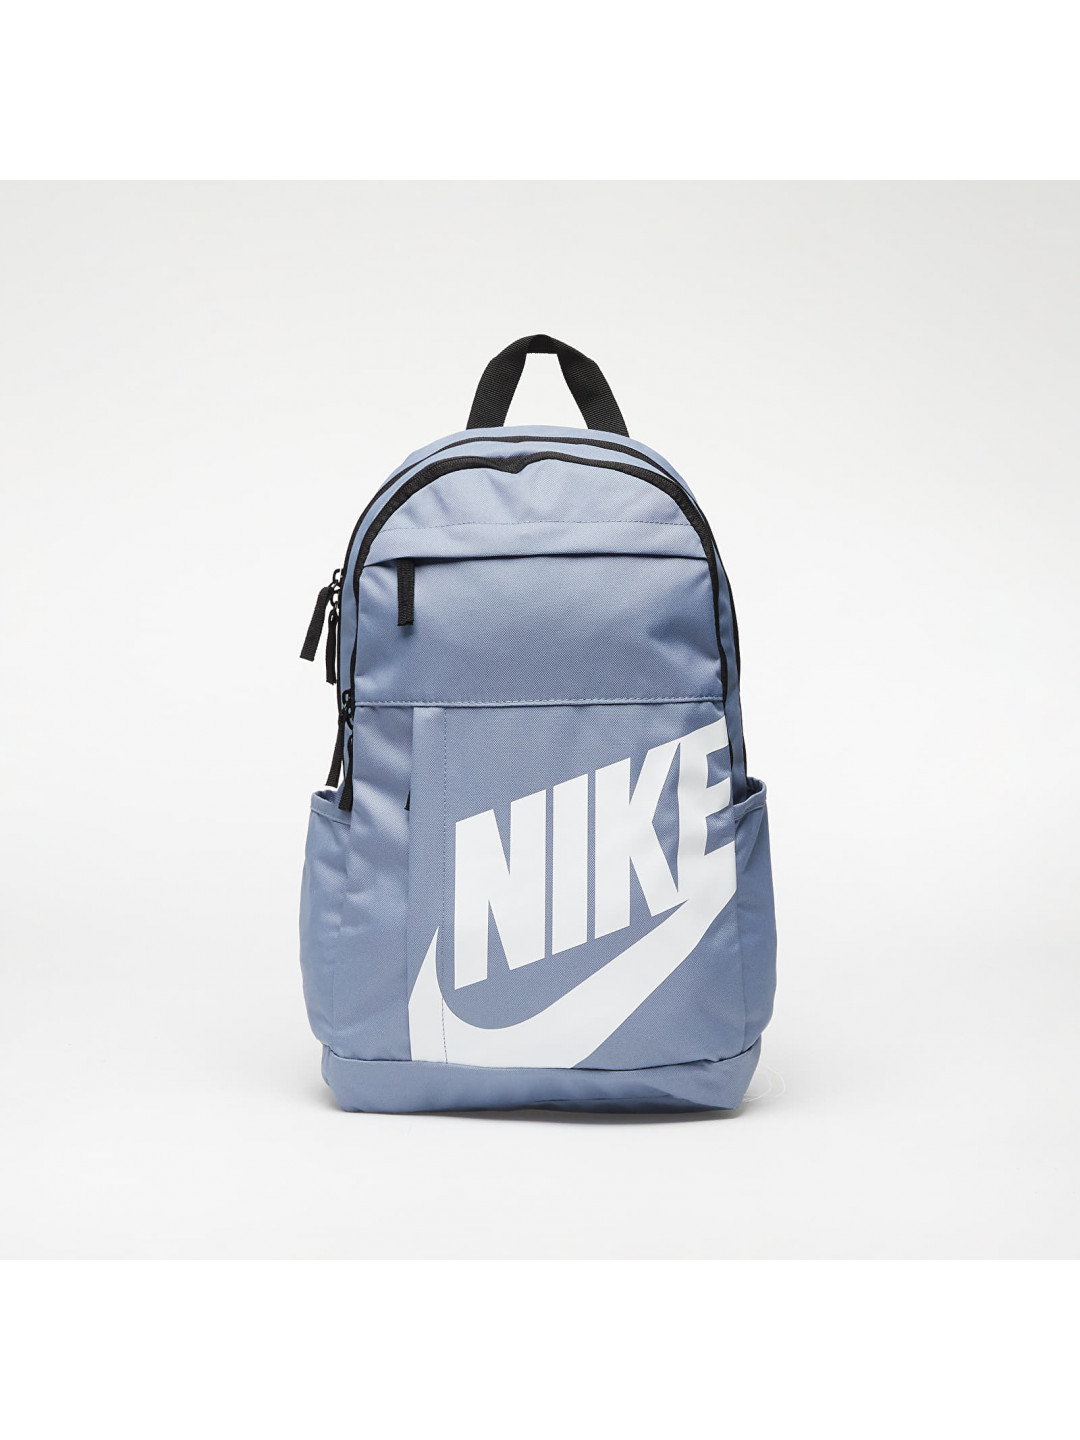 Nike Elemental Backpack Ashen Slate Black White